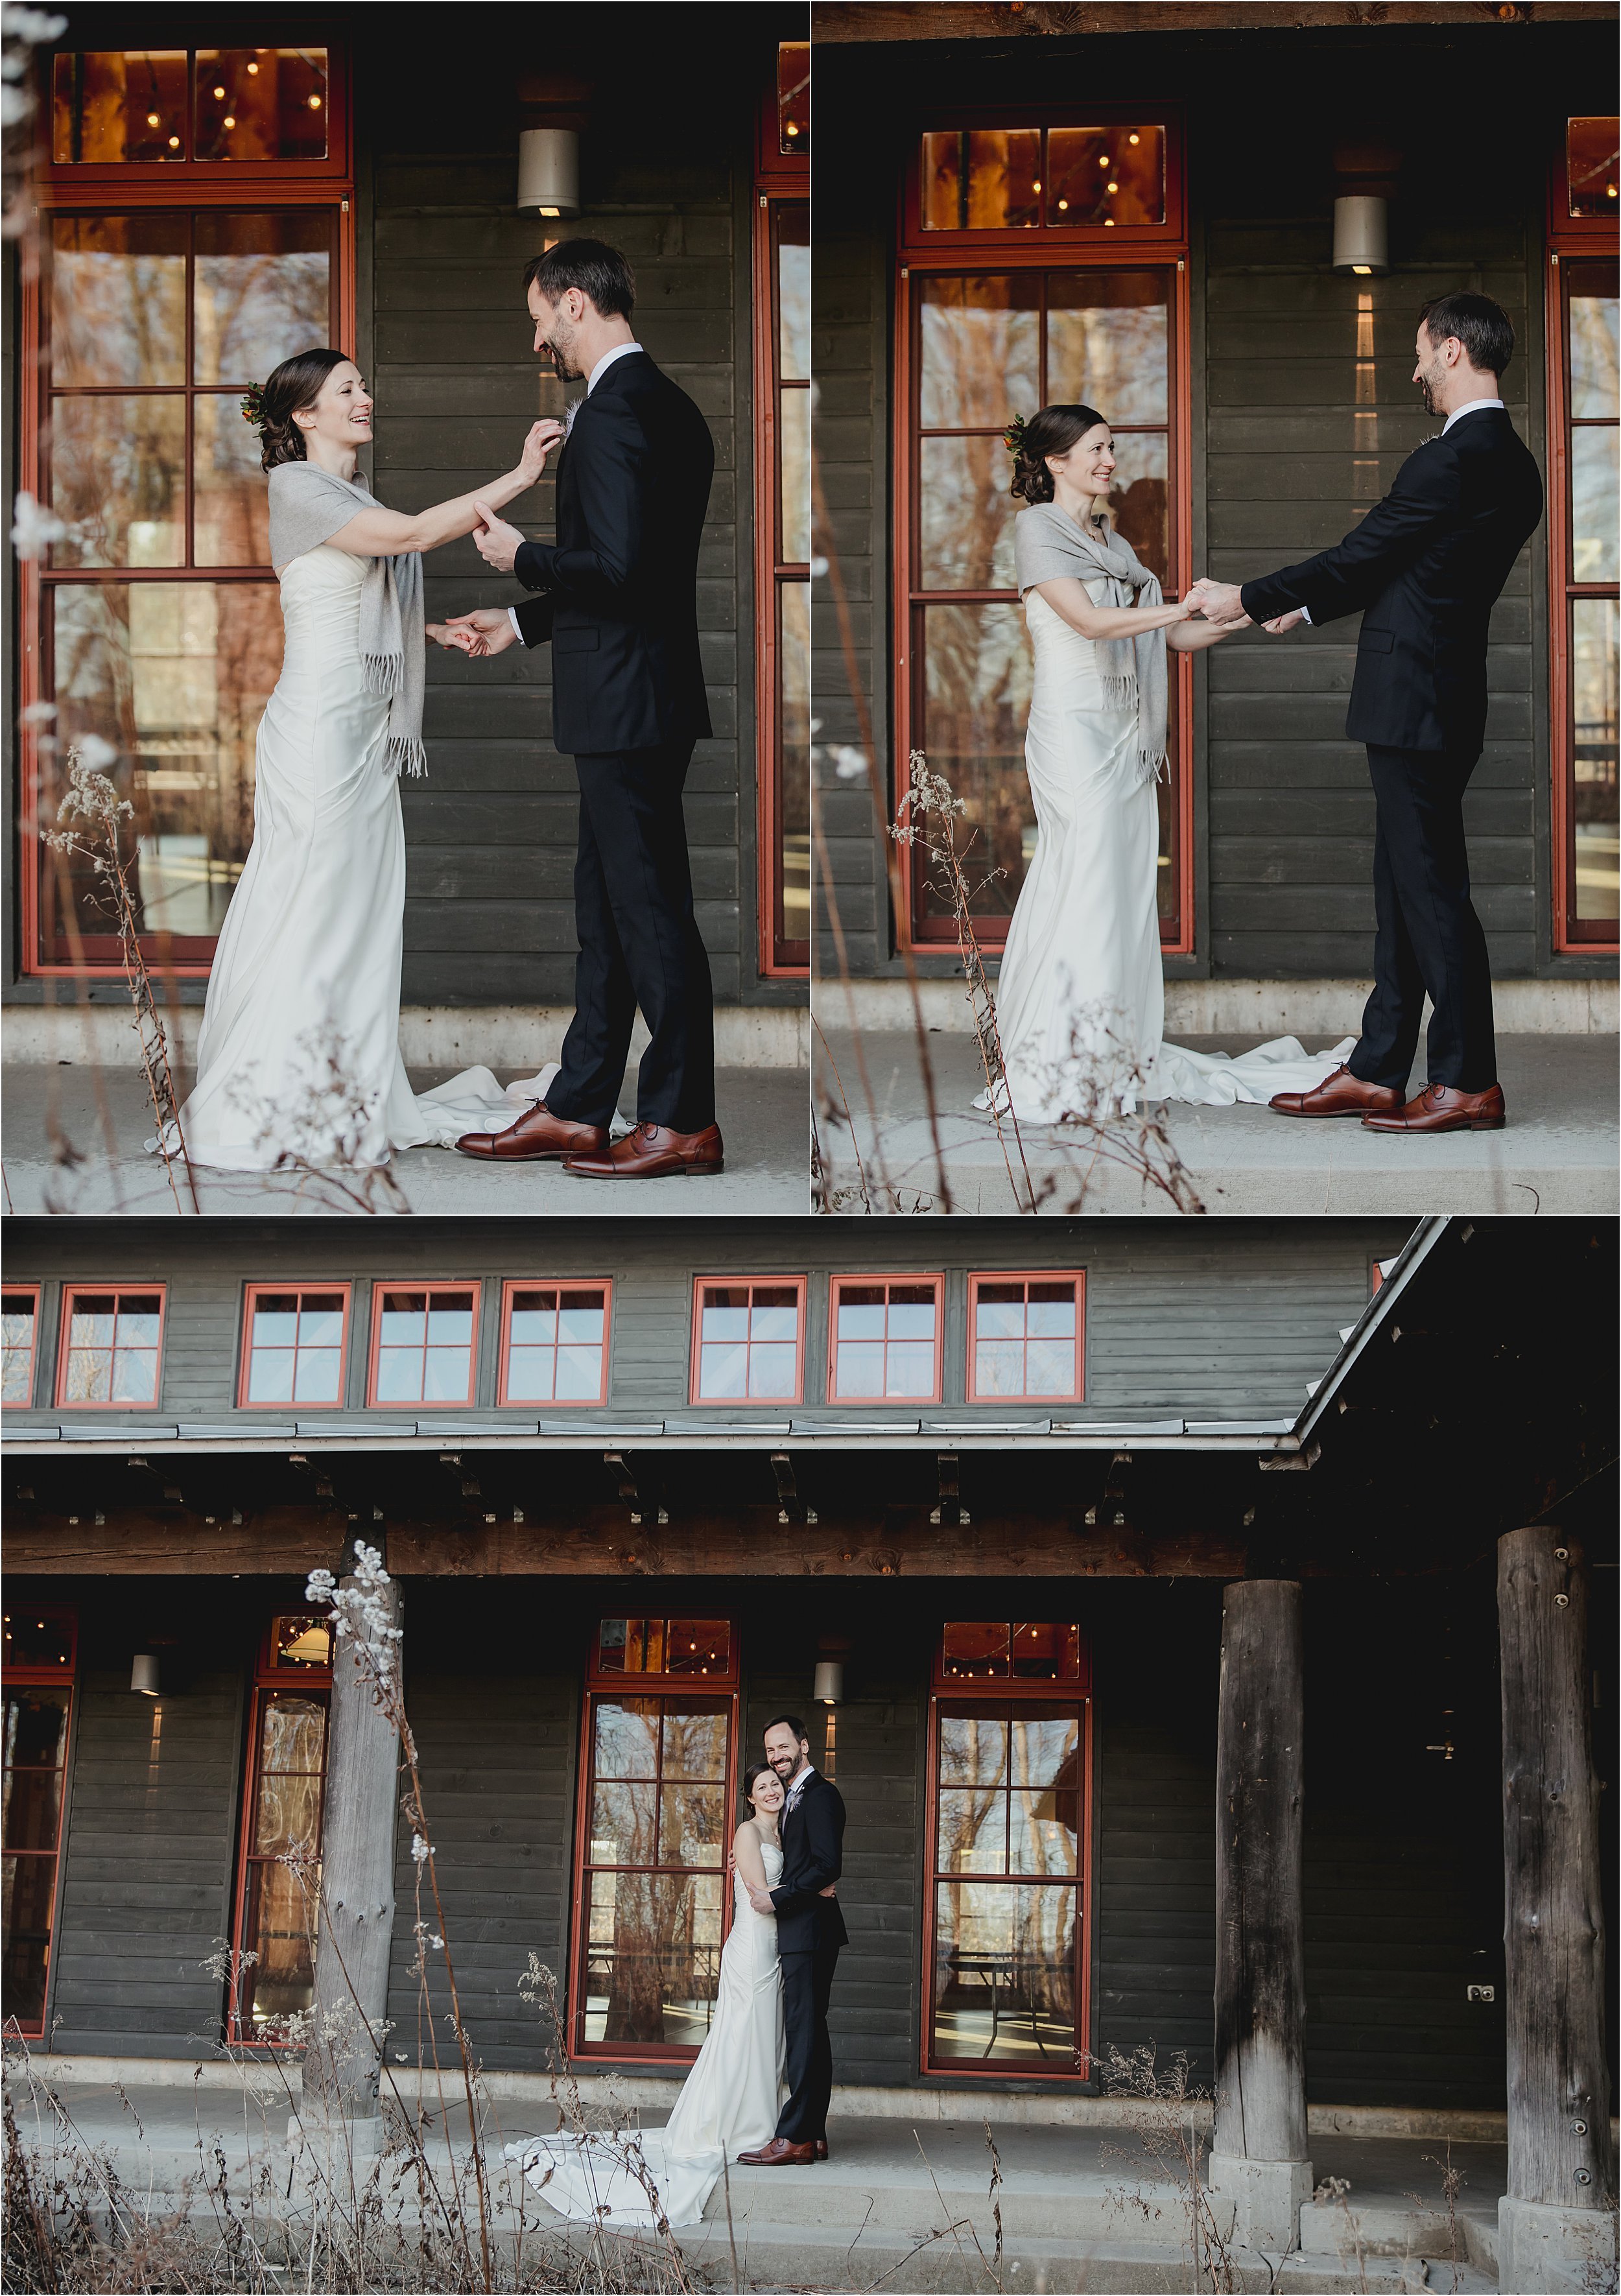 09-bride-gray-shawl-groom-first-look-glass-windows-orange-trim.JPG